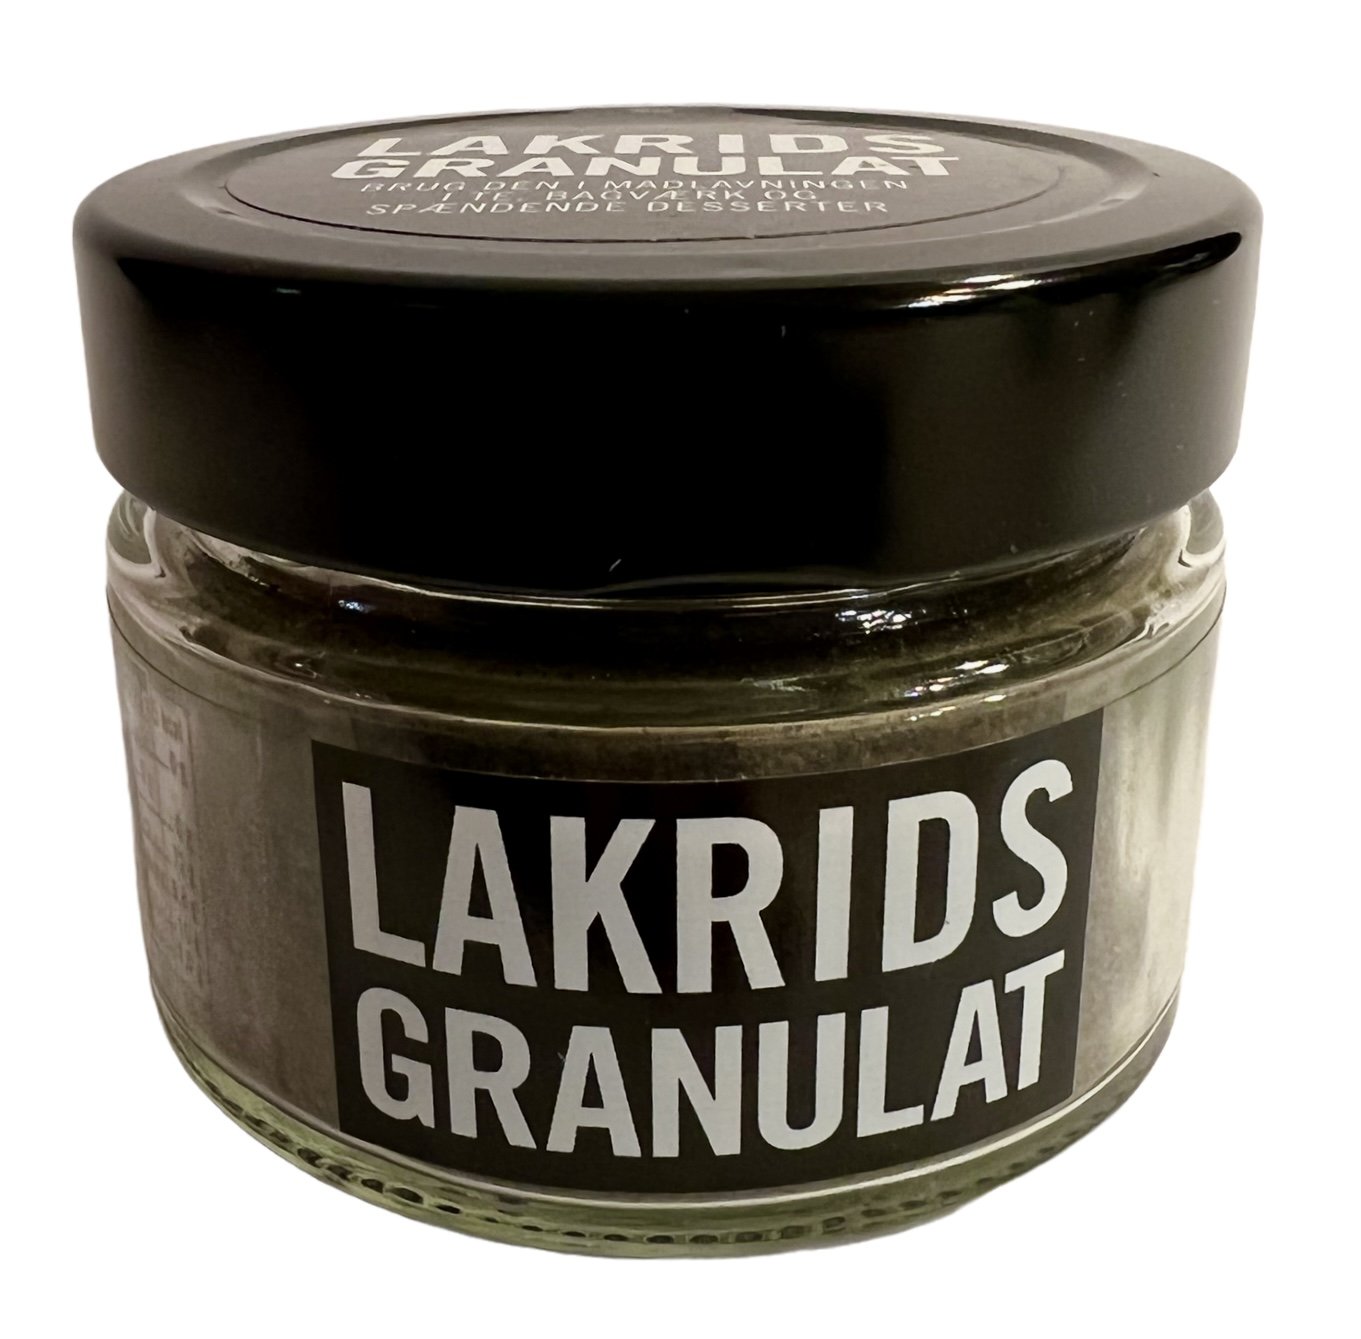 Lakrids granulat 60g